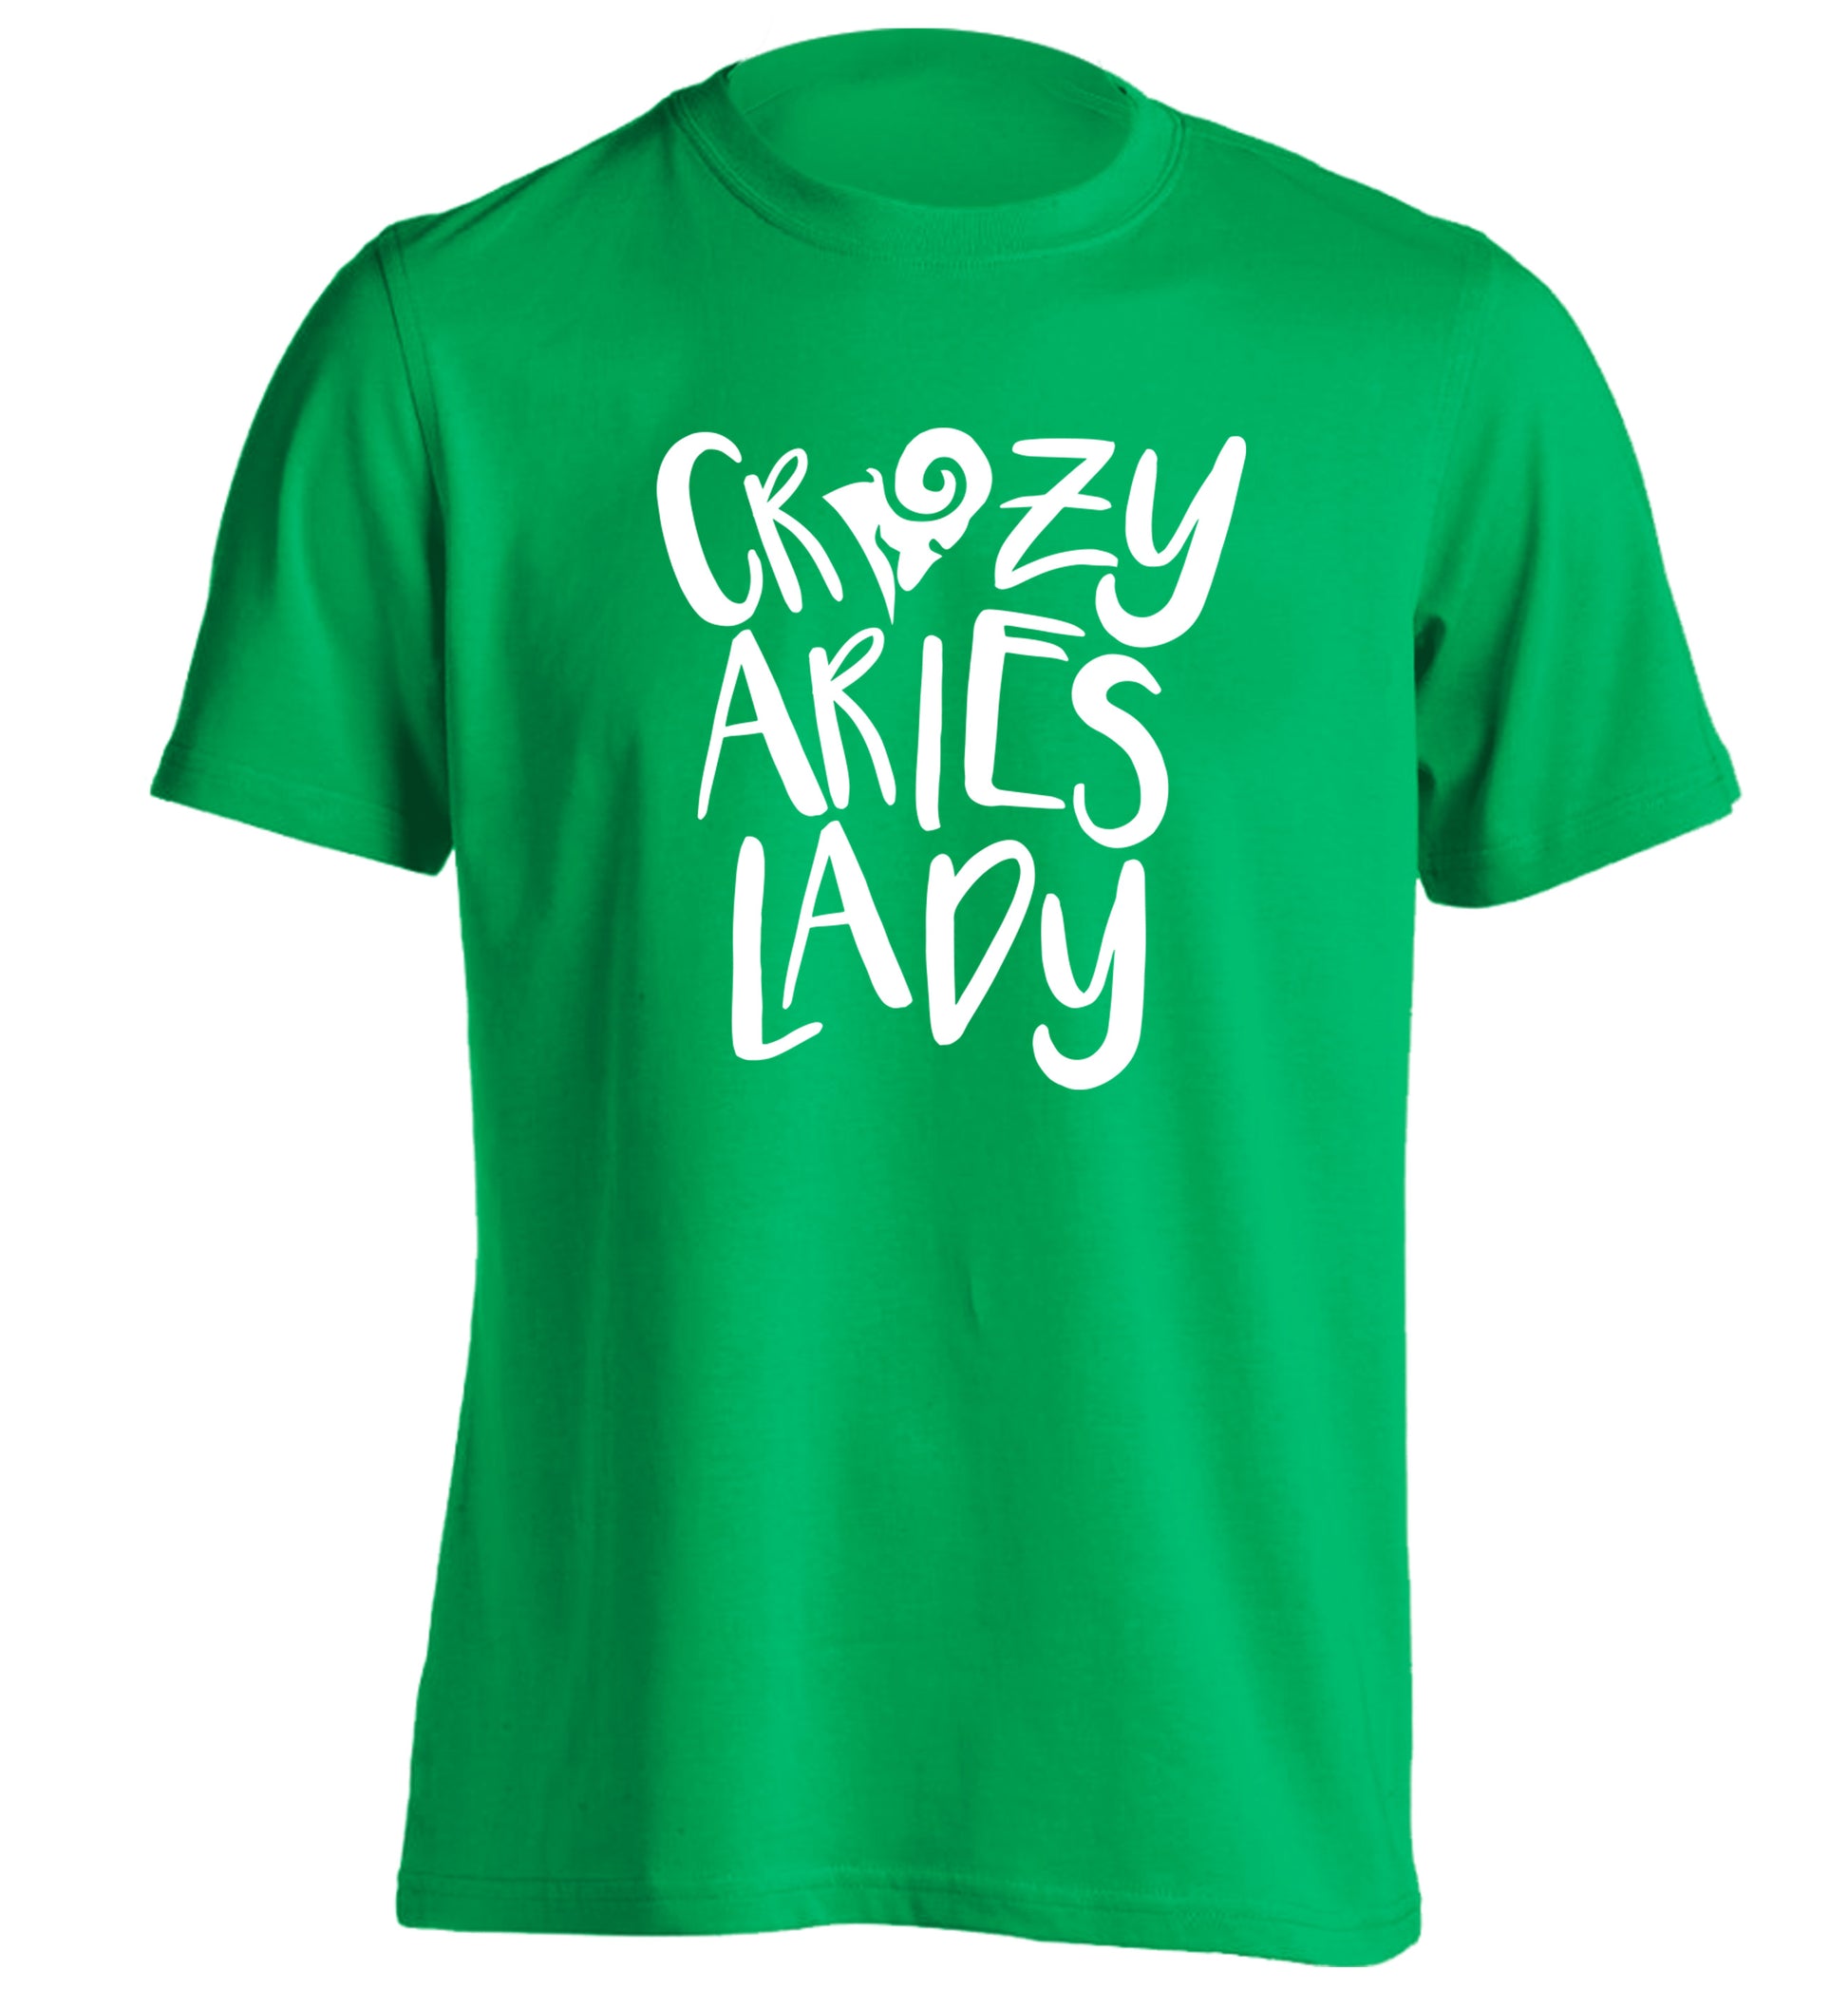 Crazy aries lady adults unisex green Tshirt 2XL